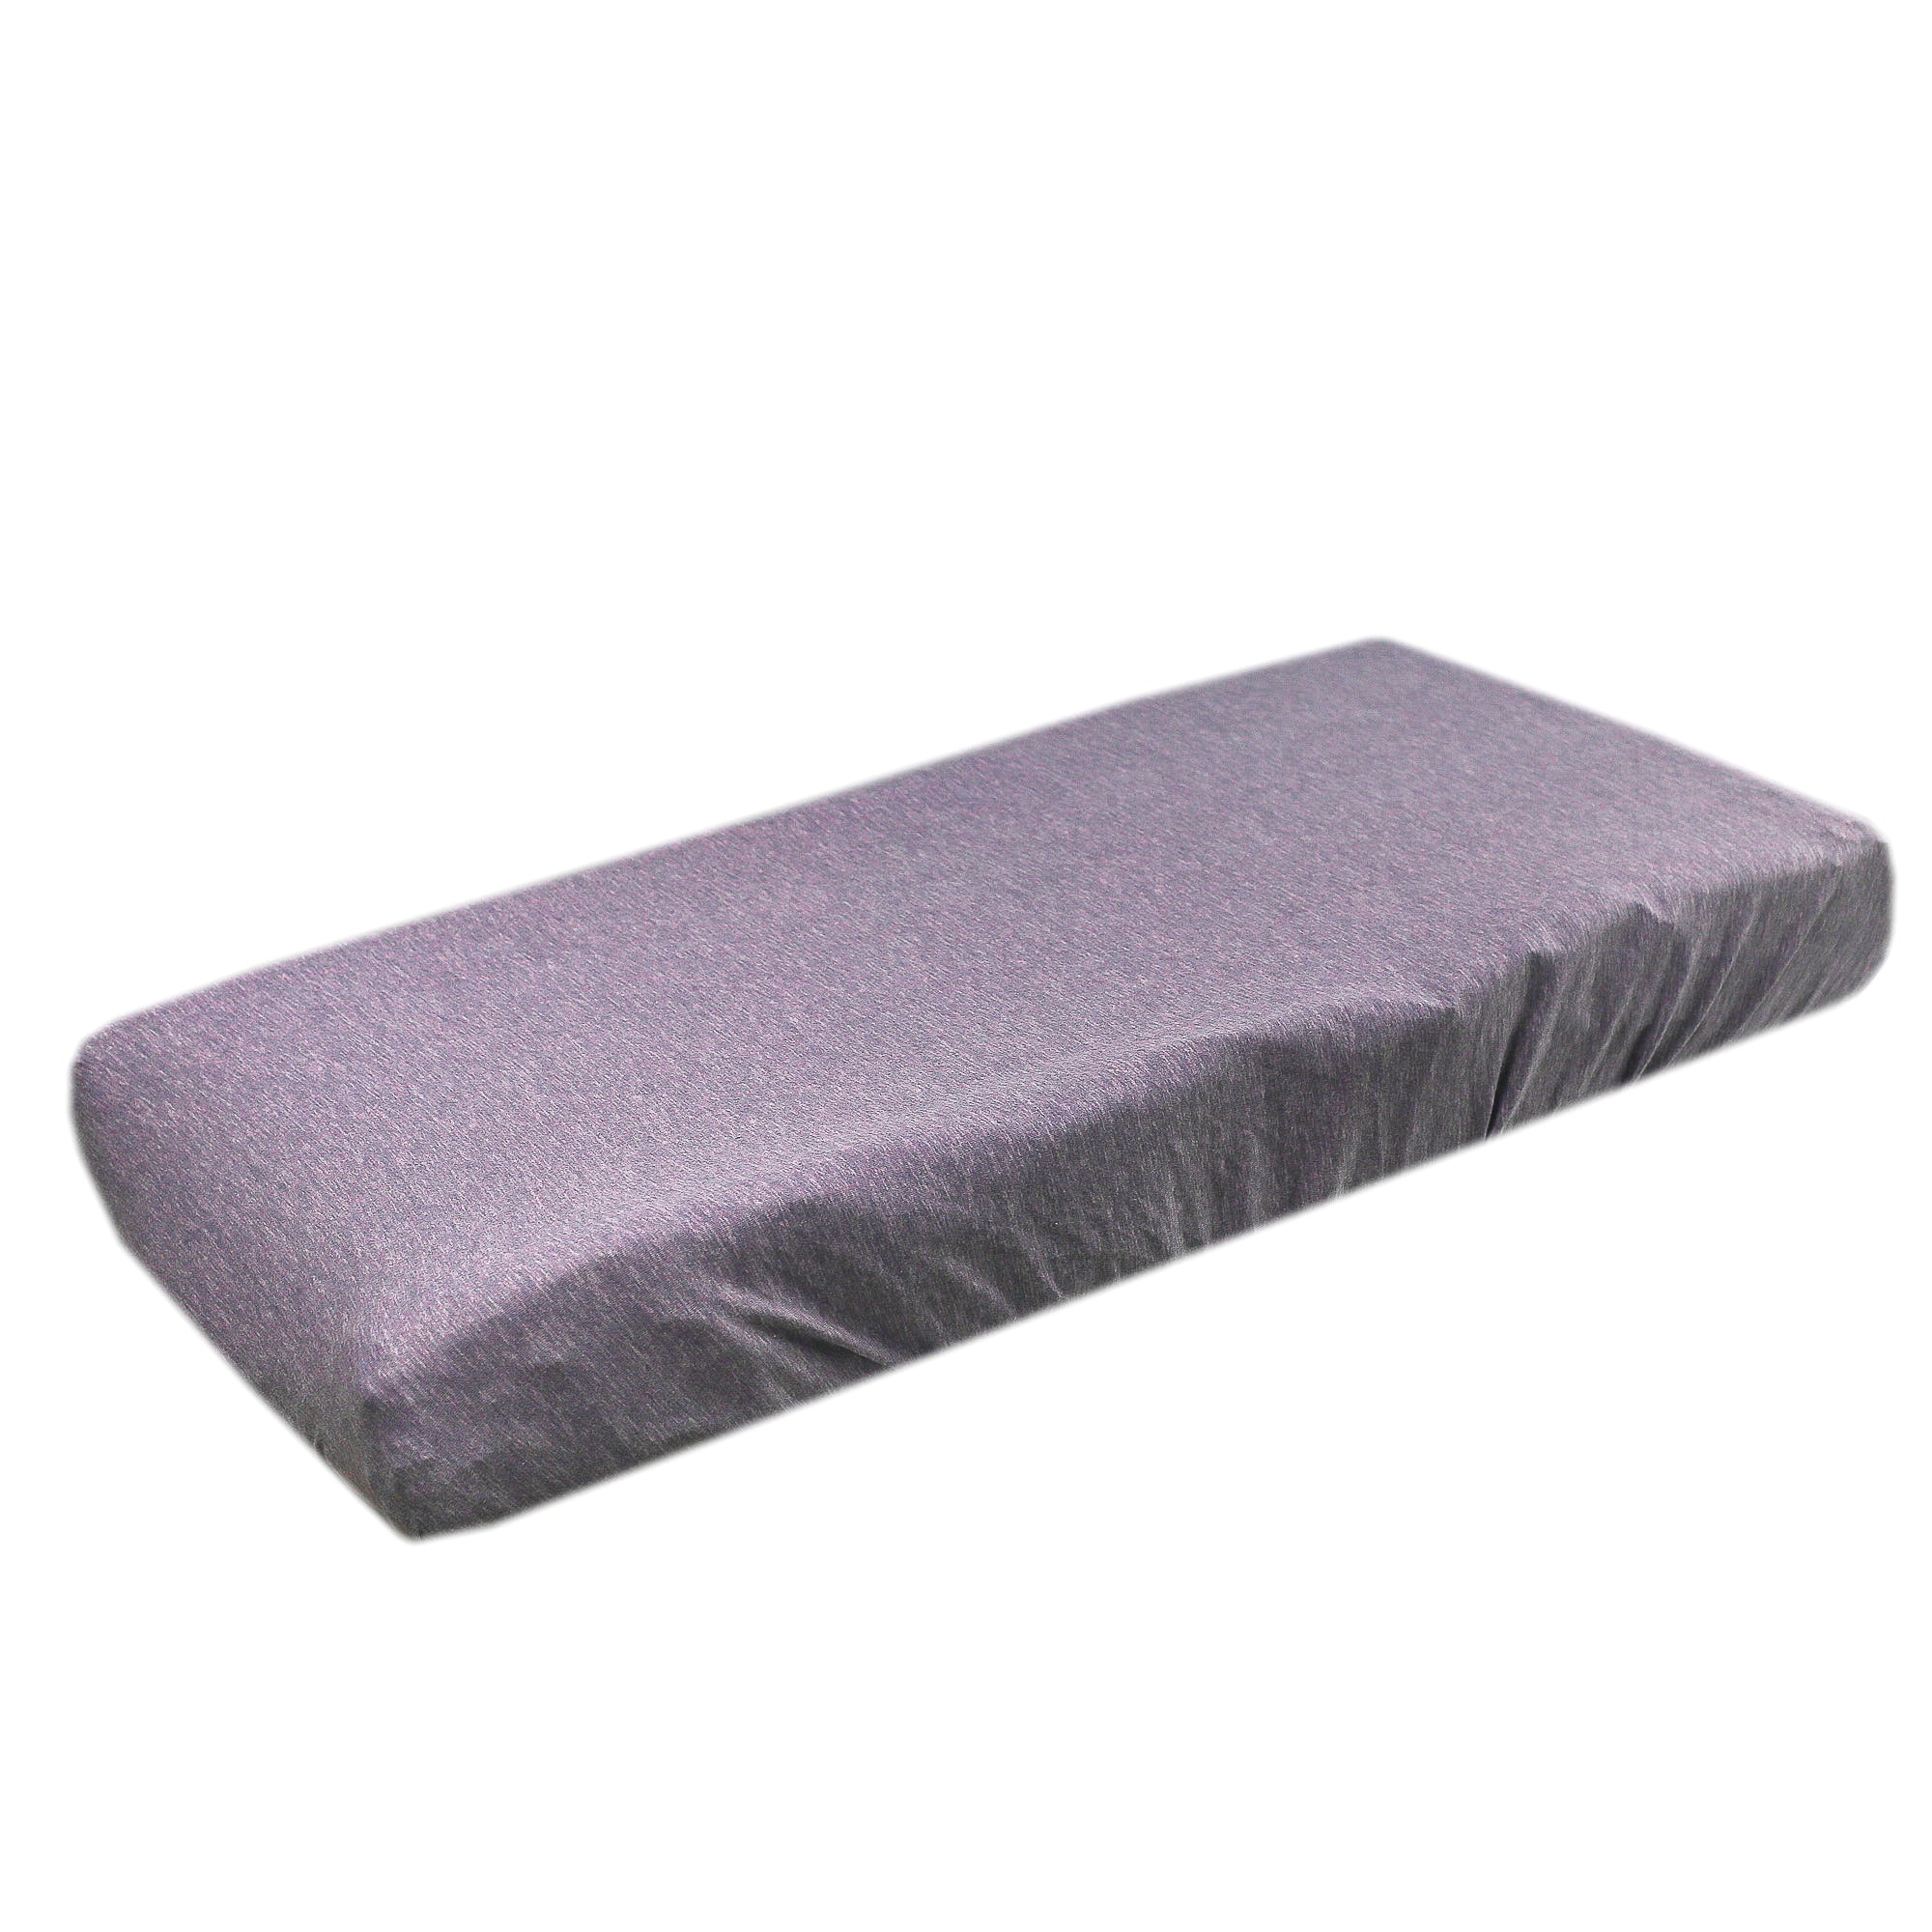 Premium Knit Diaper Changing Pad Cover - Violet